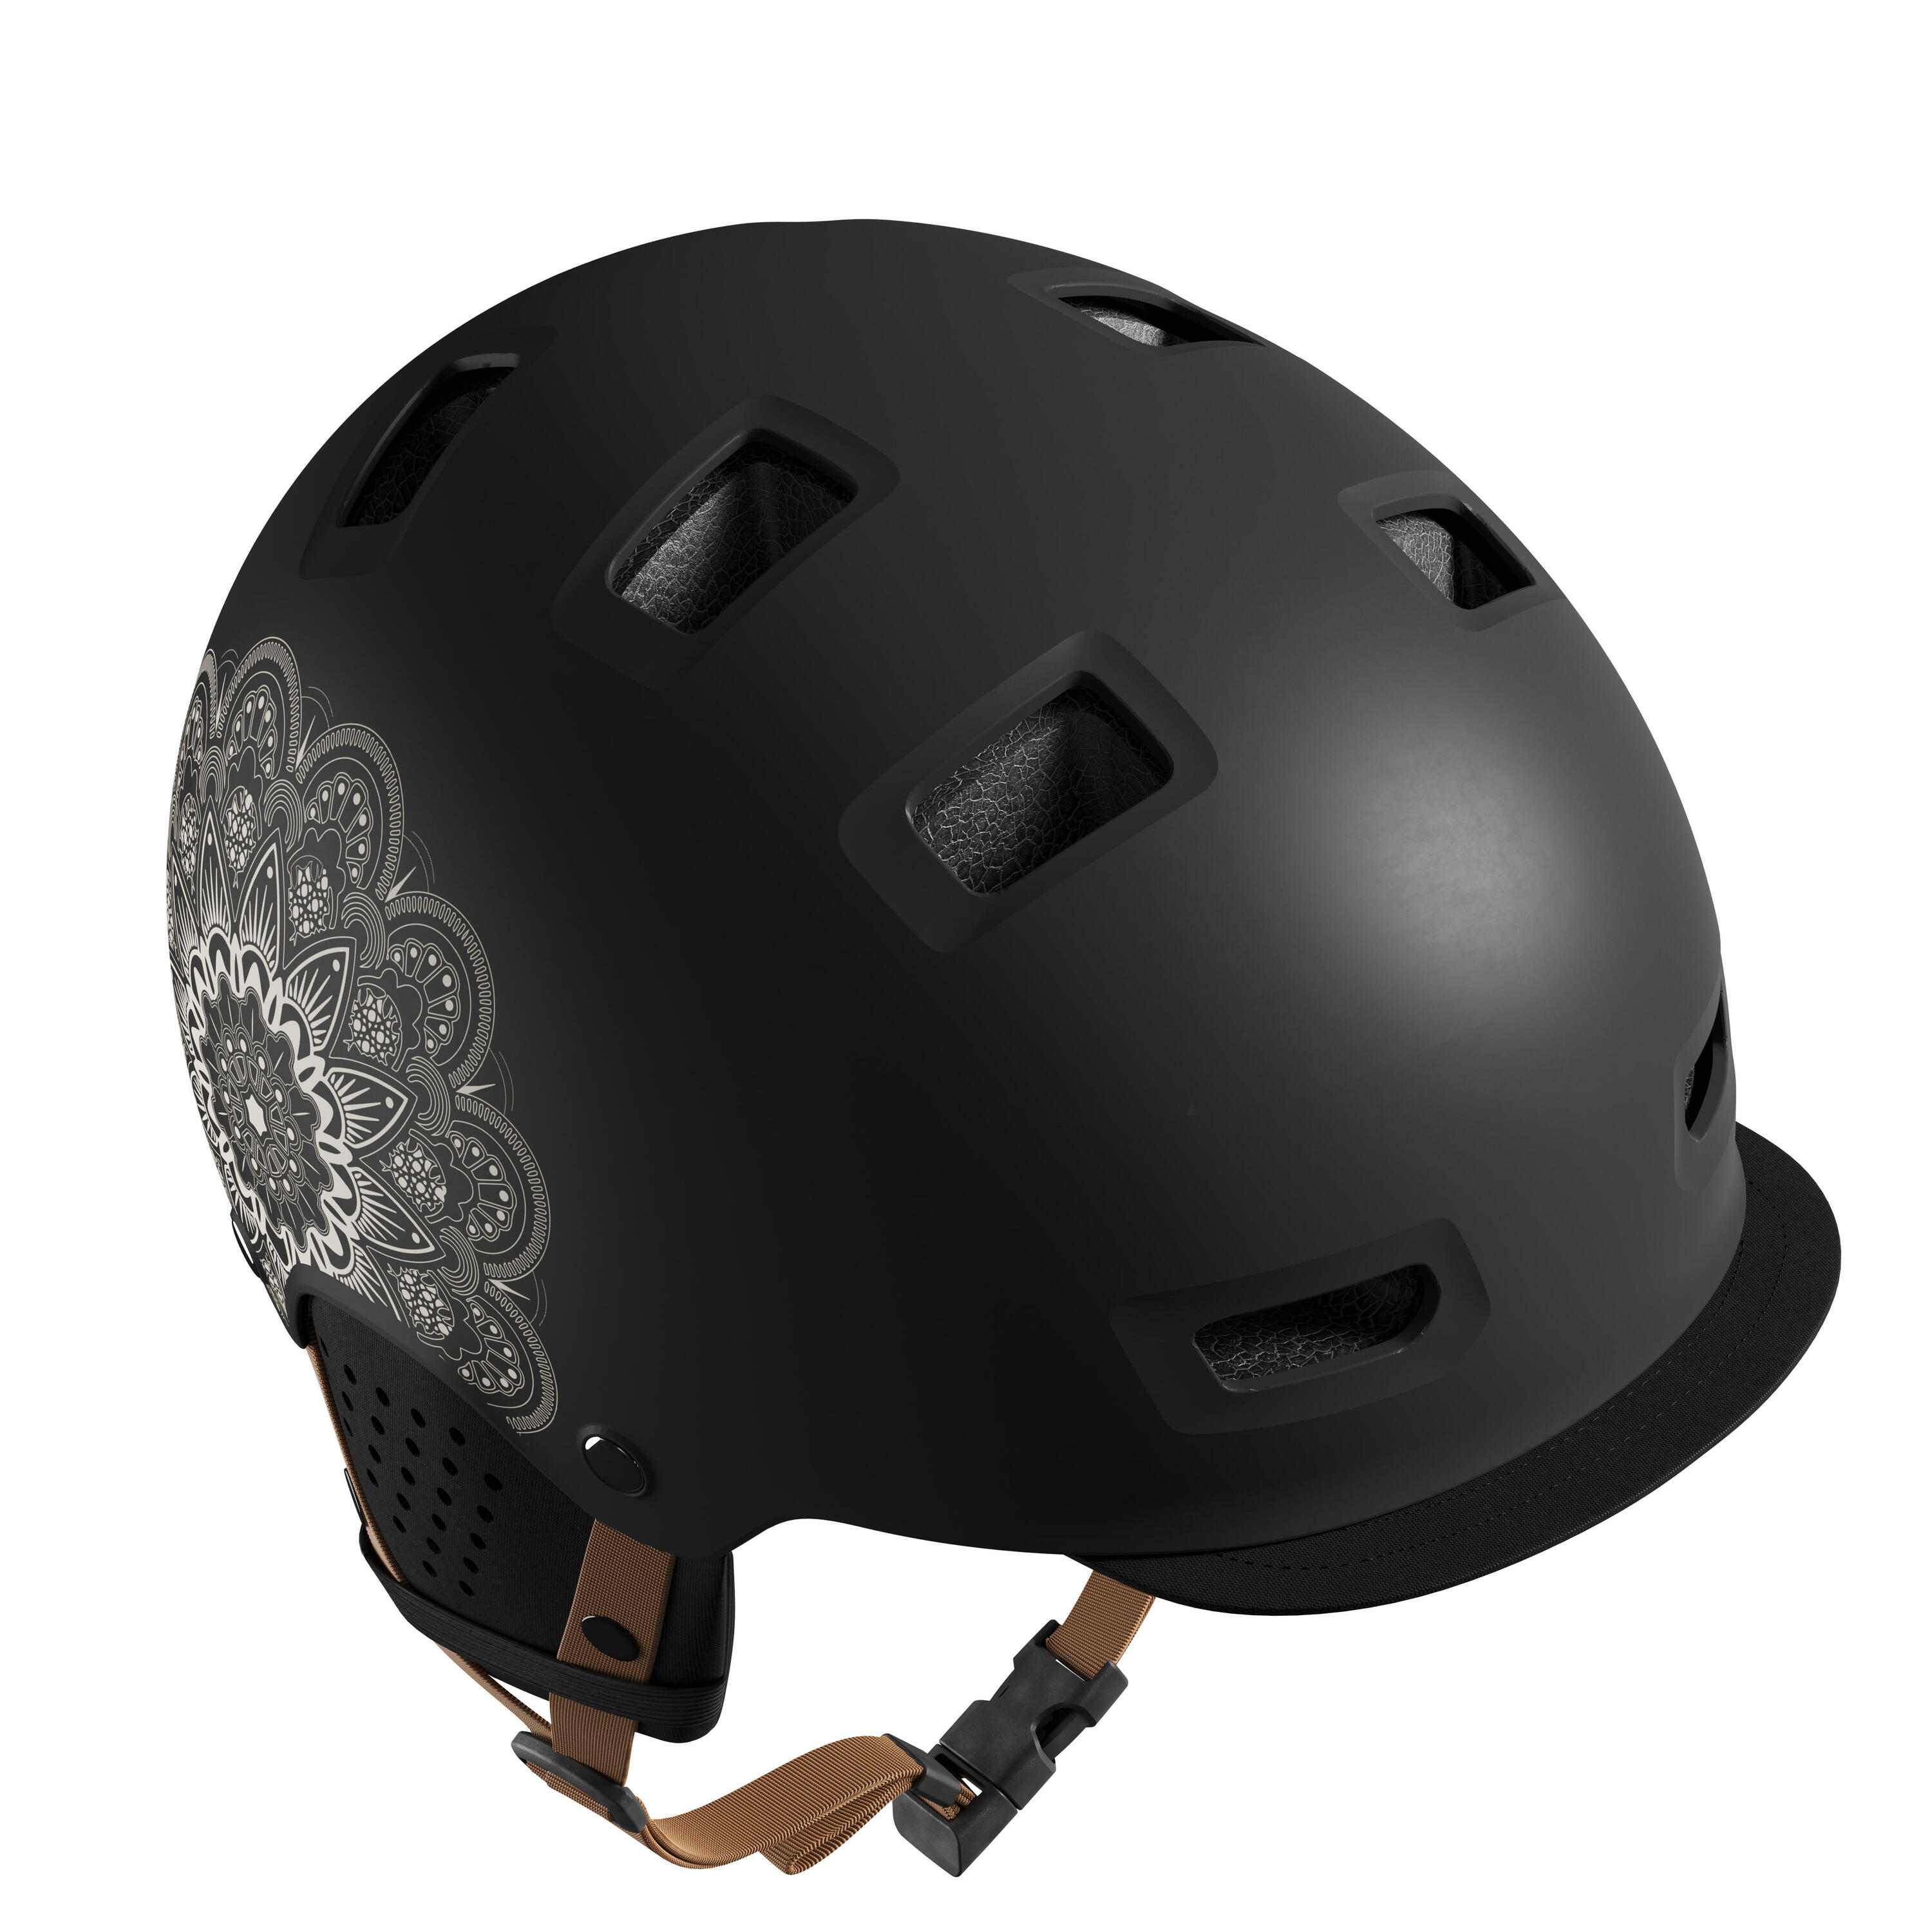 BTWIN Cycling Bowl City Bike Helmet 500 - Graphic Black